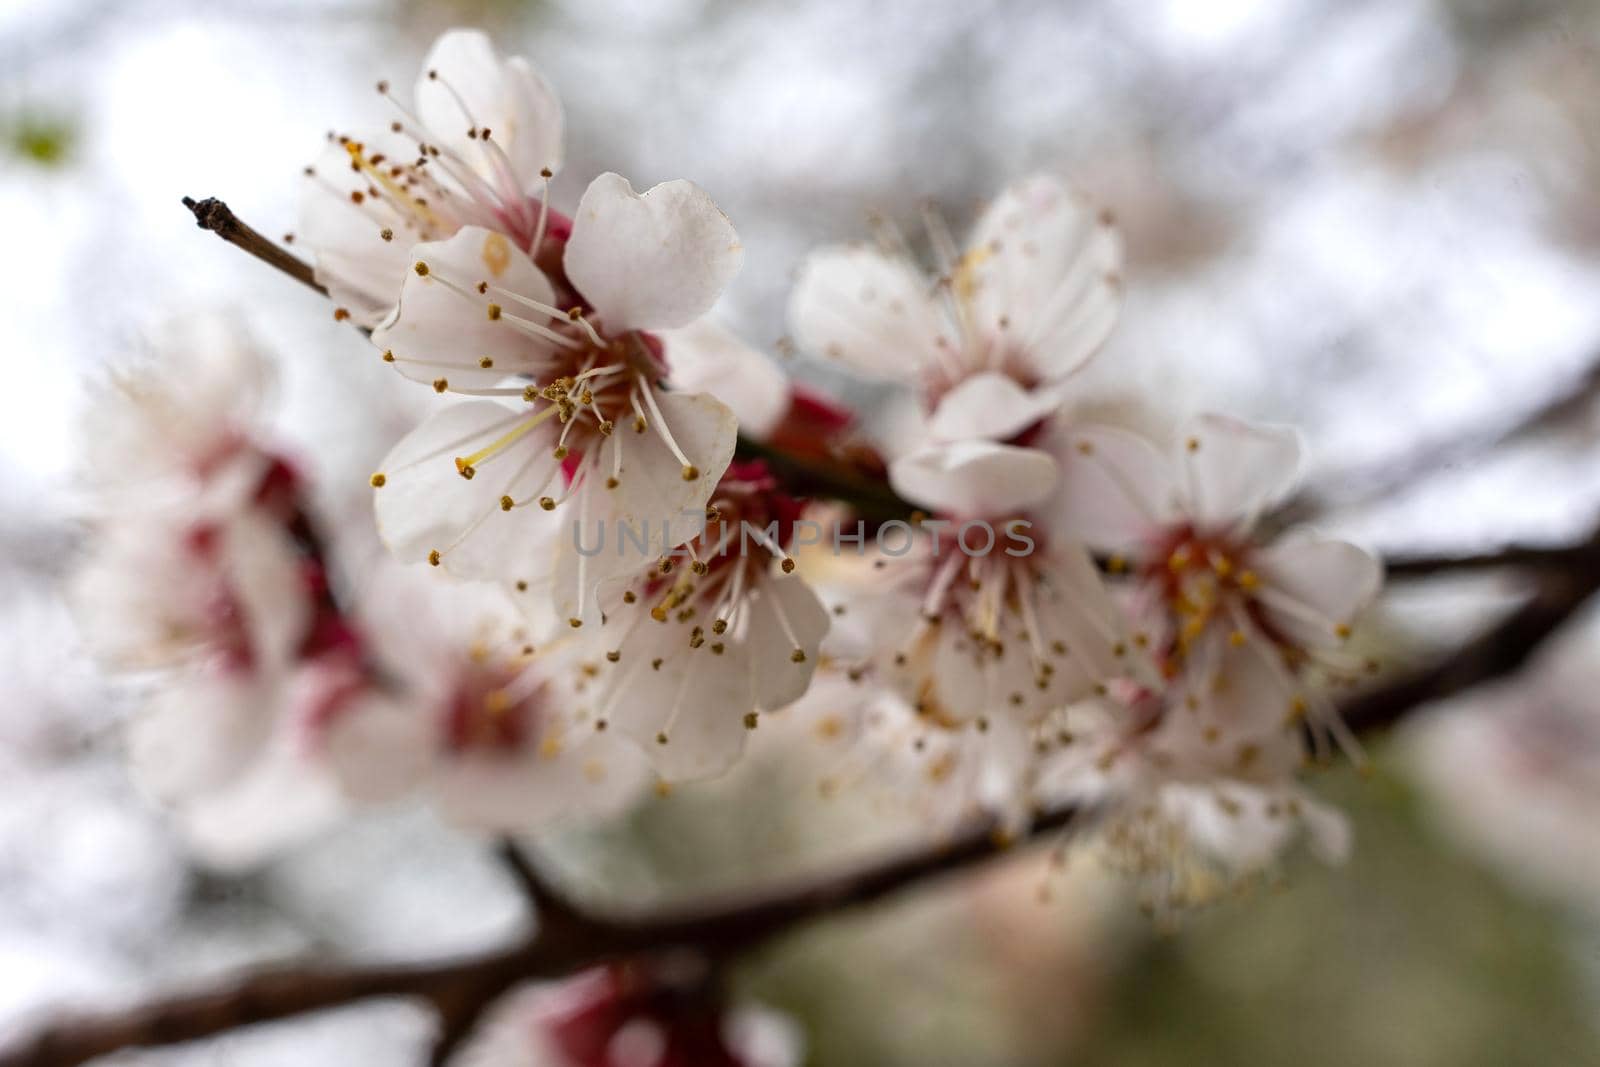 Abundant cherry blossoms with white flowers. Closeup photo with blurred background by Serhii_Voroshchuk